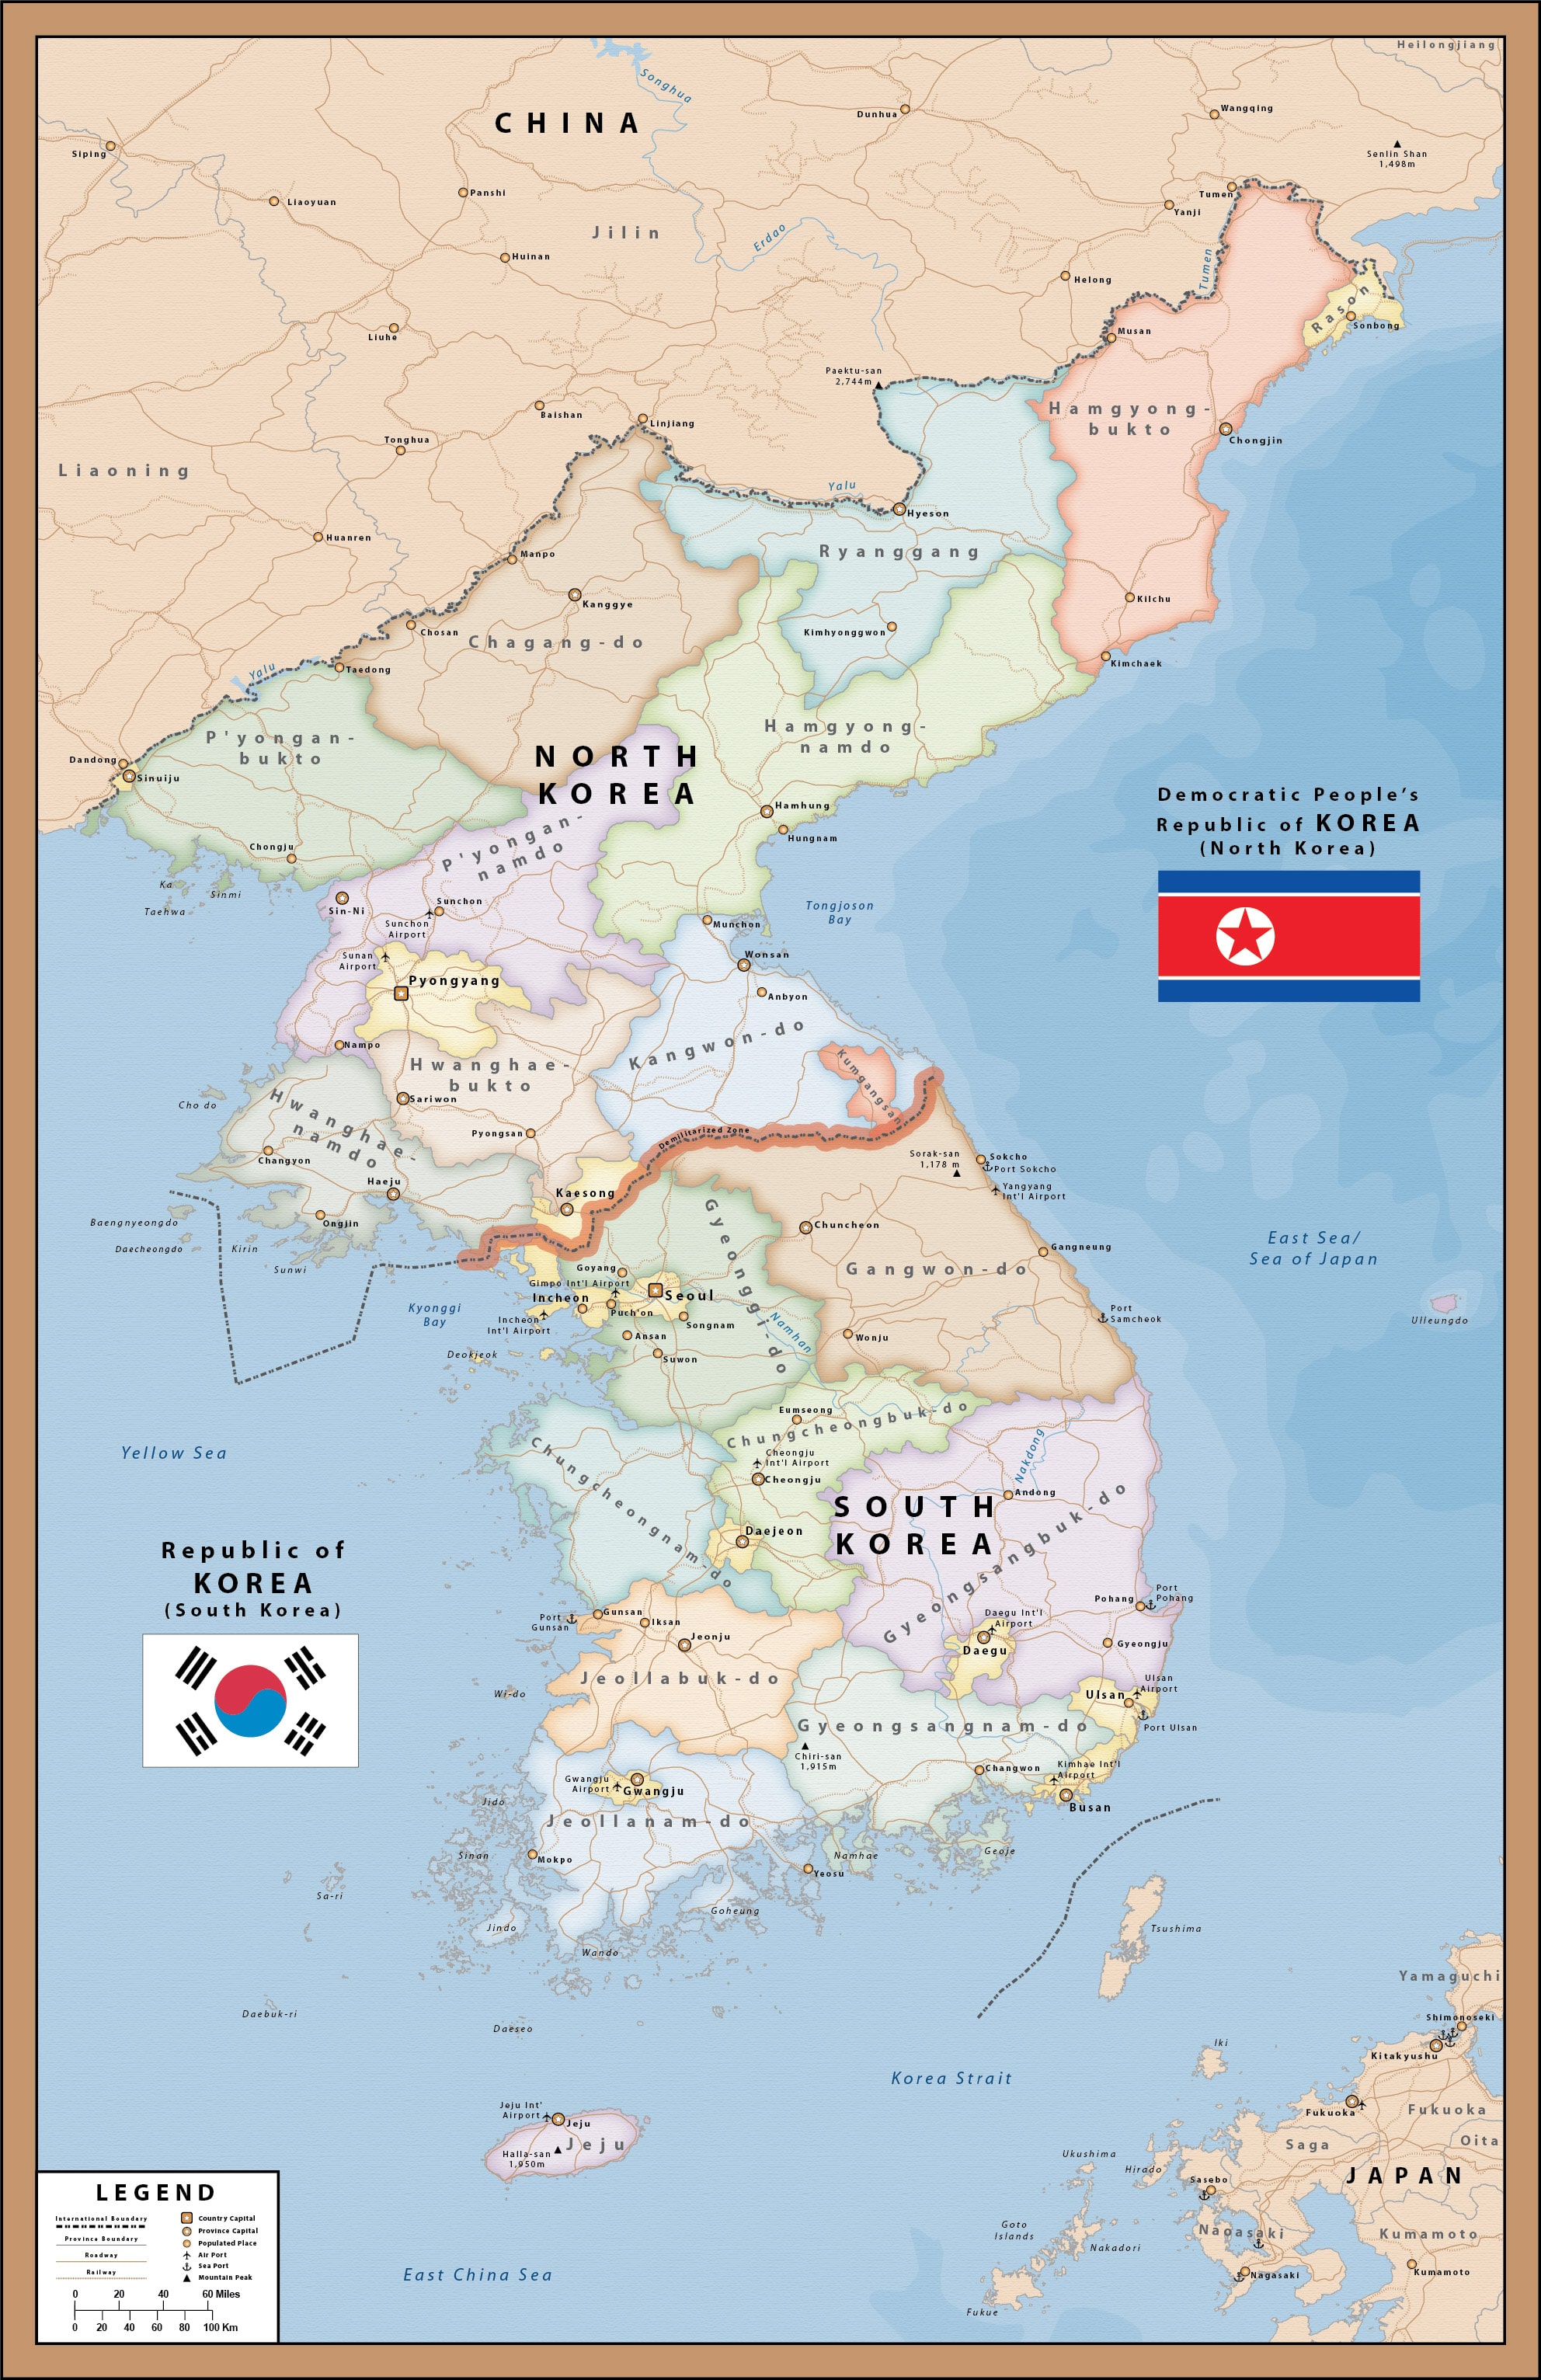 North Korea And South Korea Map At Night - Map Costa Rica and Panama